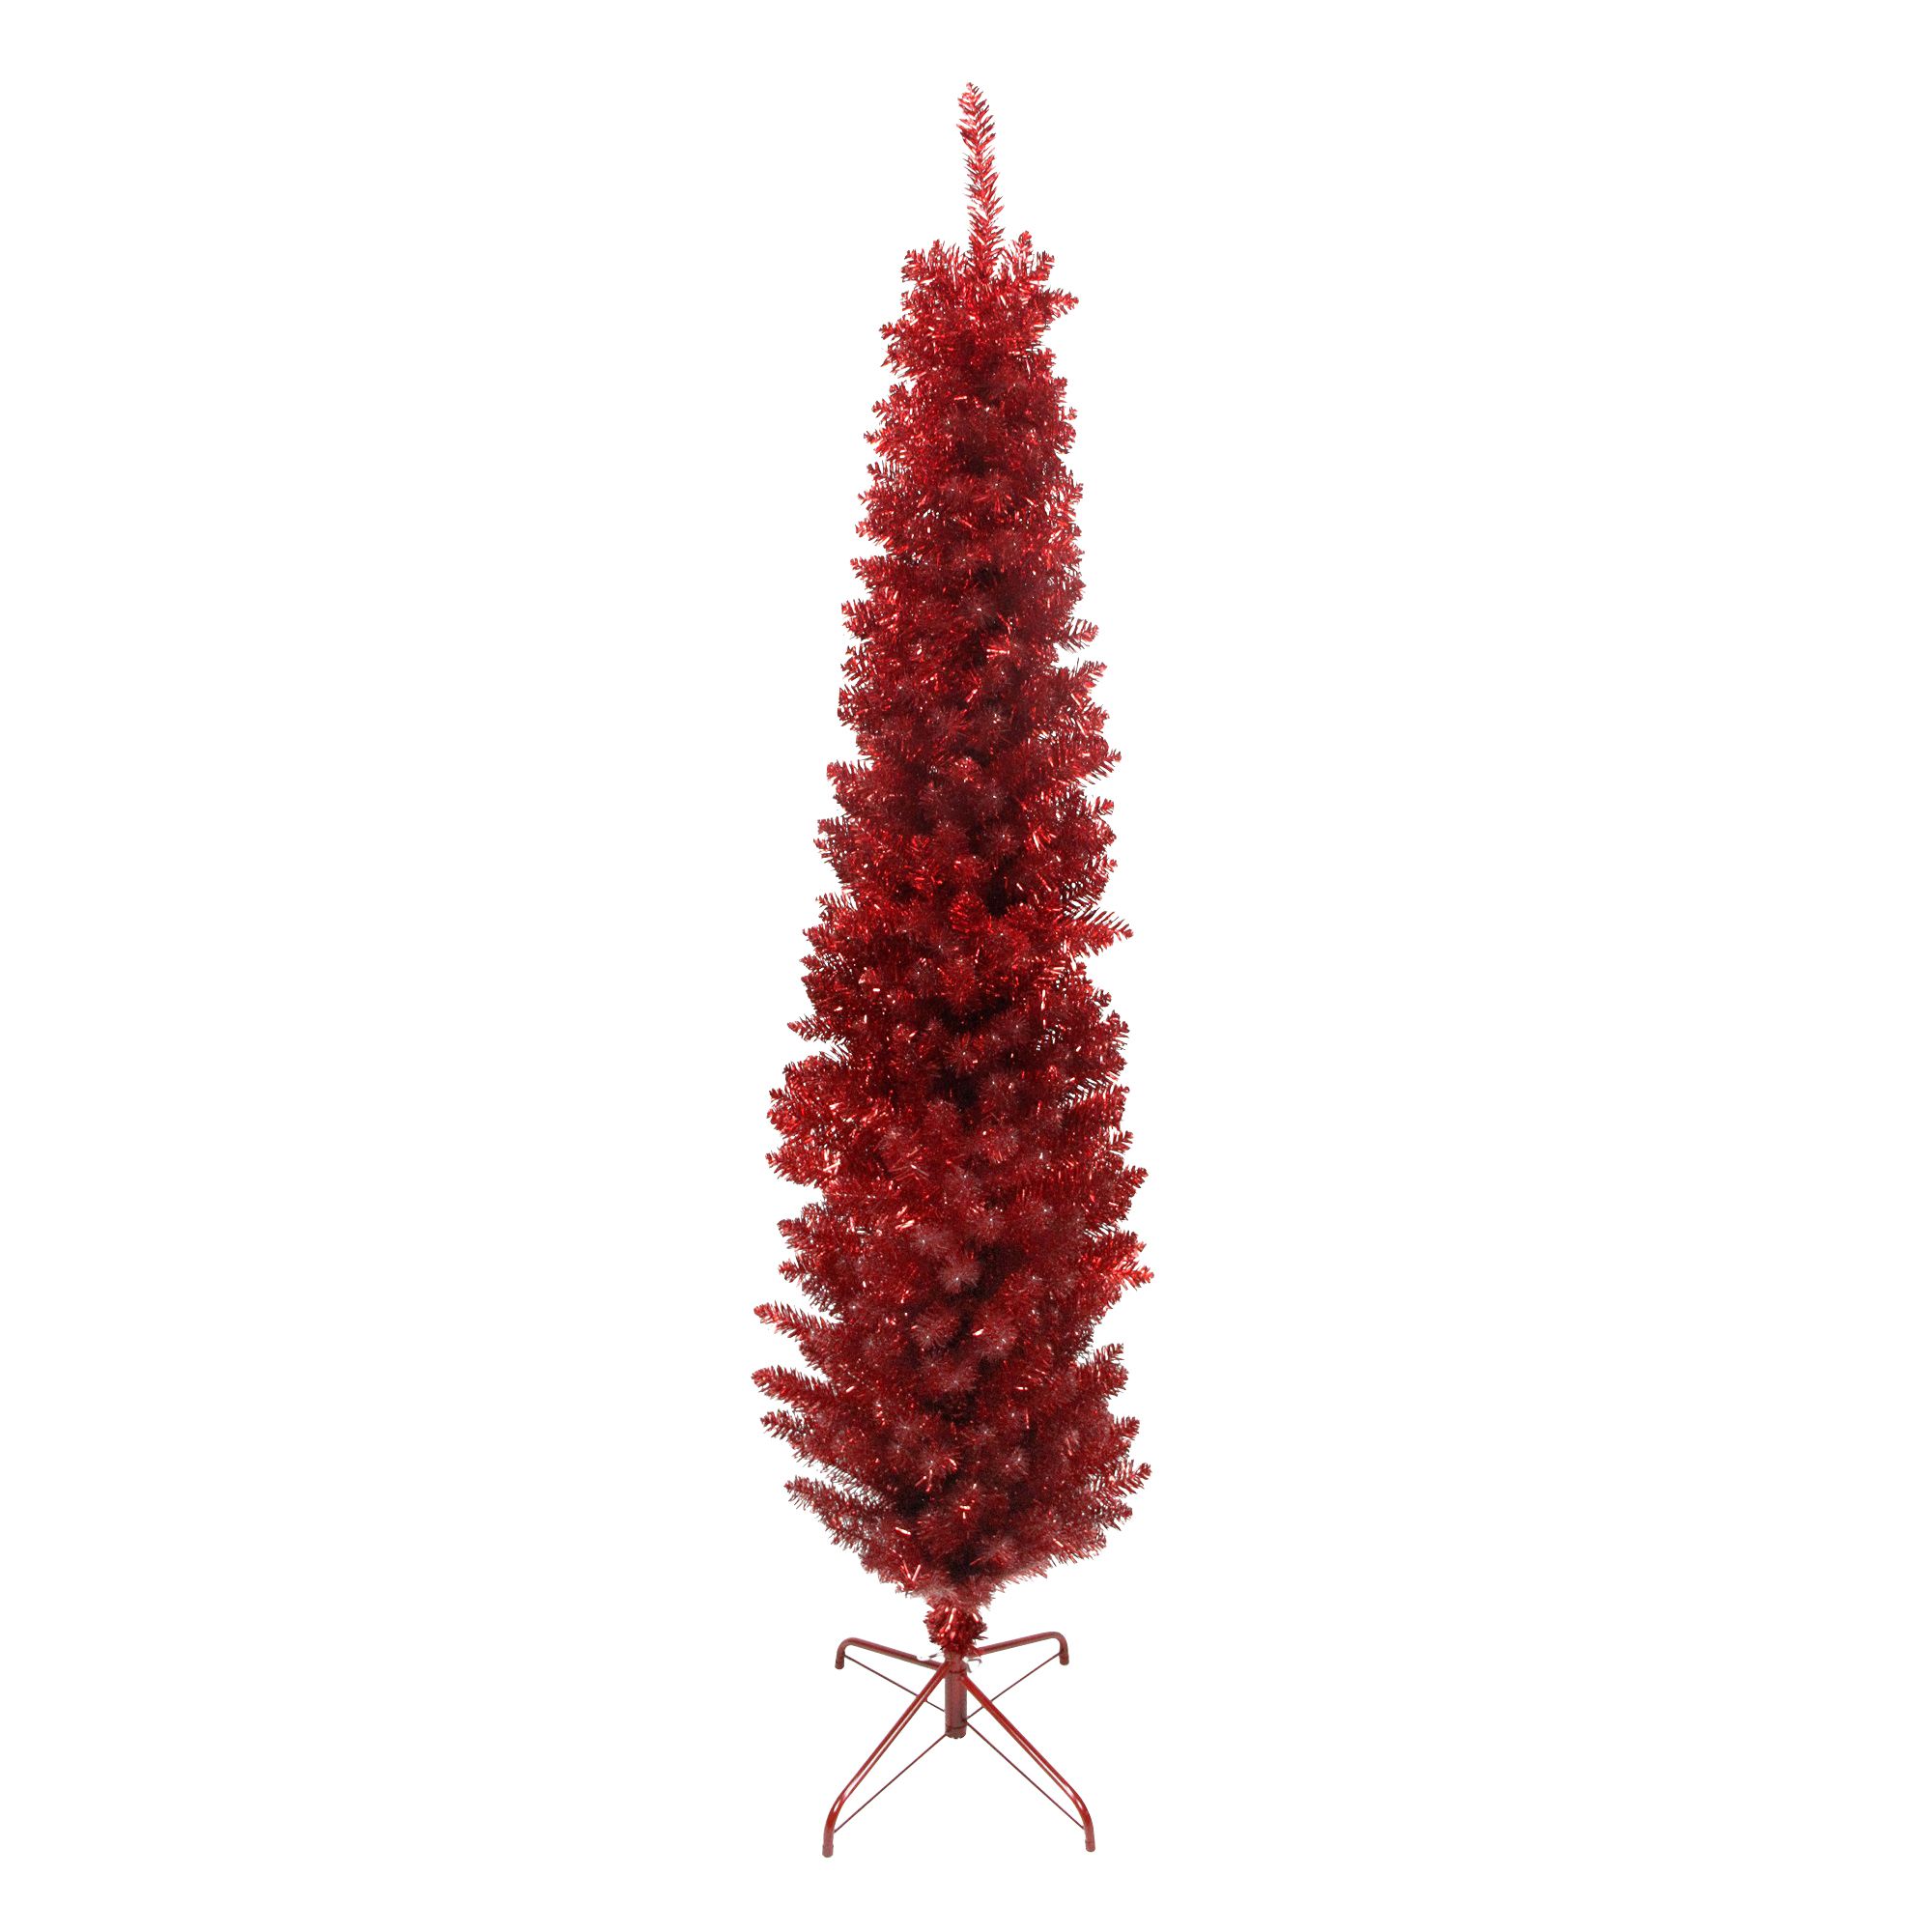 6' x 8 Burgundy Red Berry Artificial Christmas Garland- Unlit